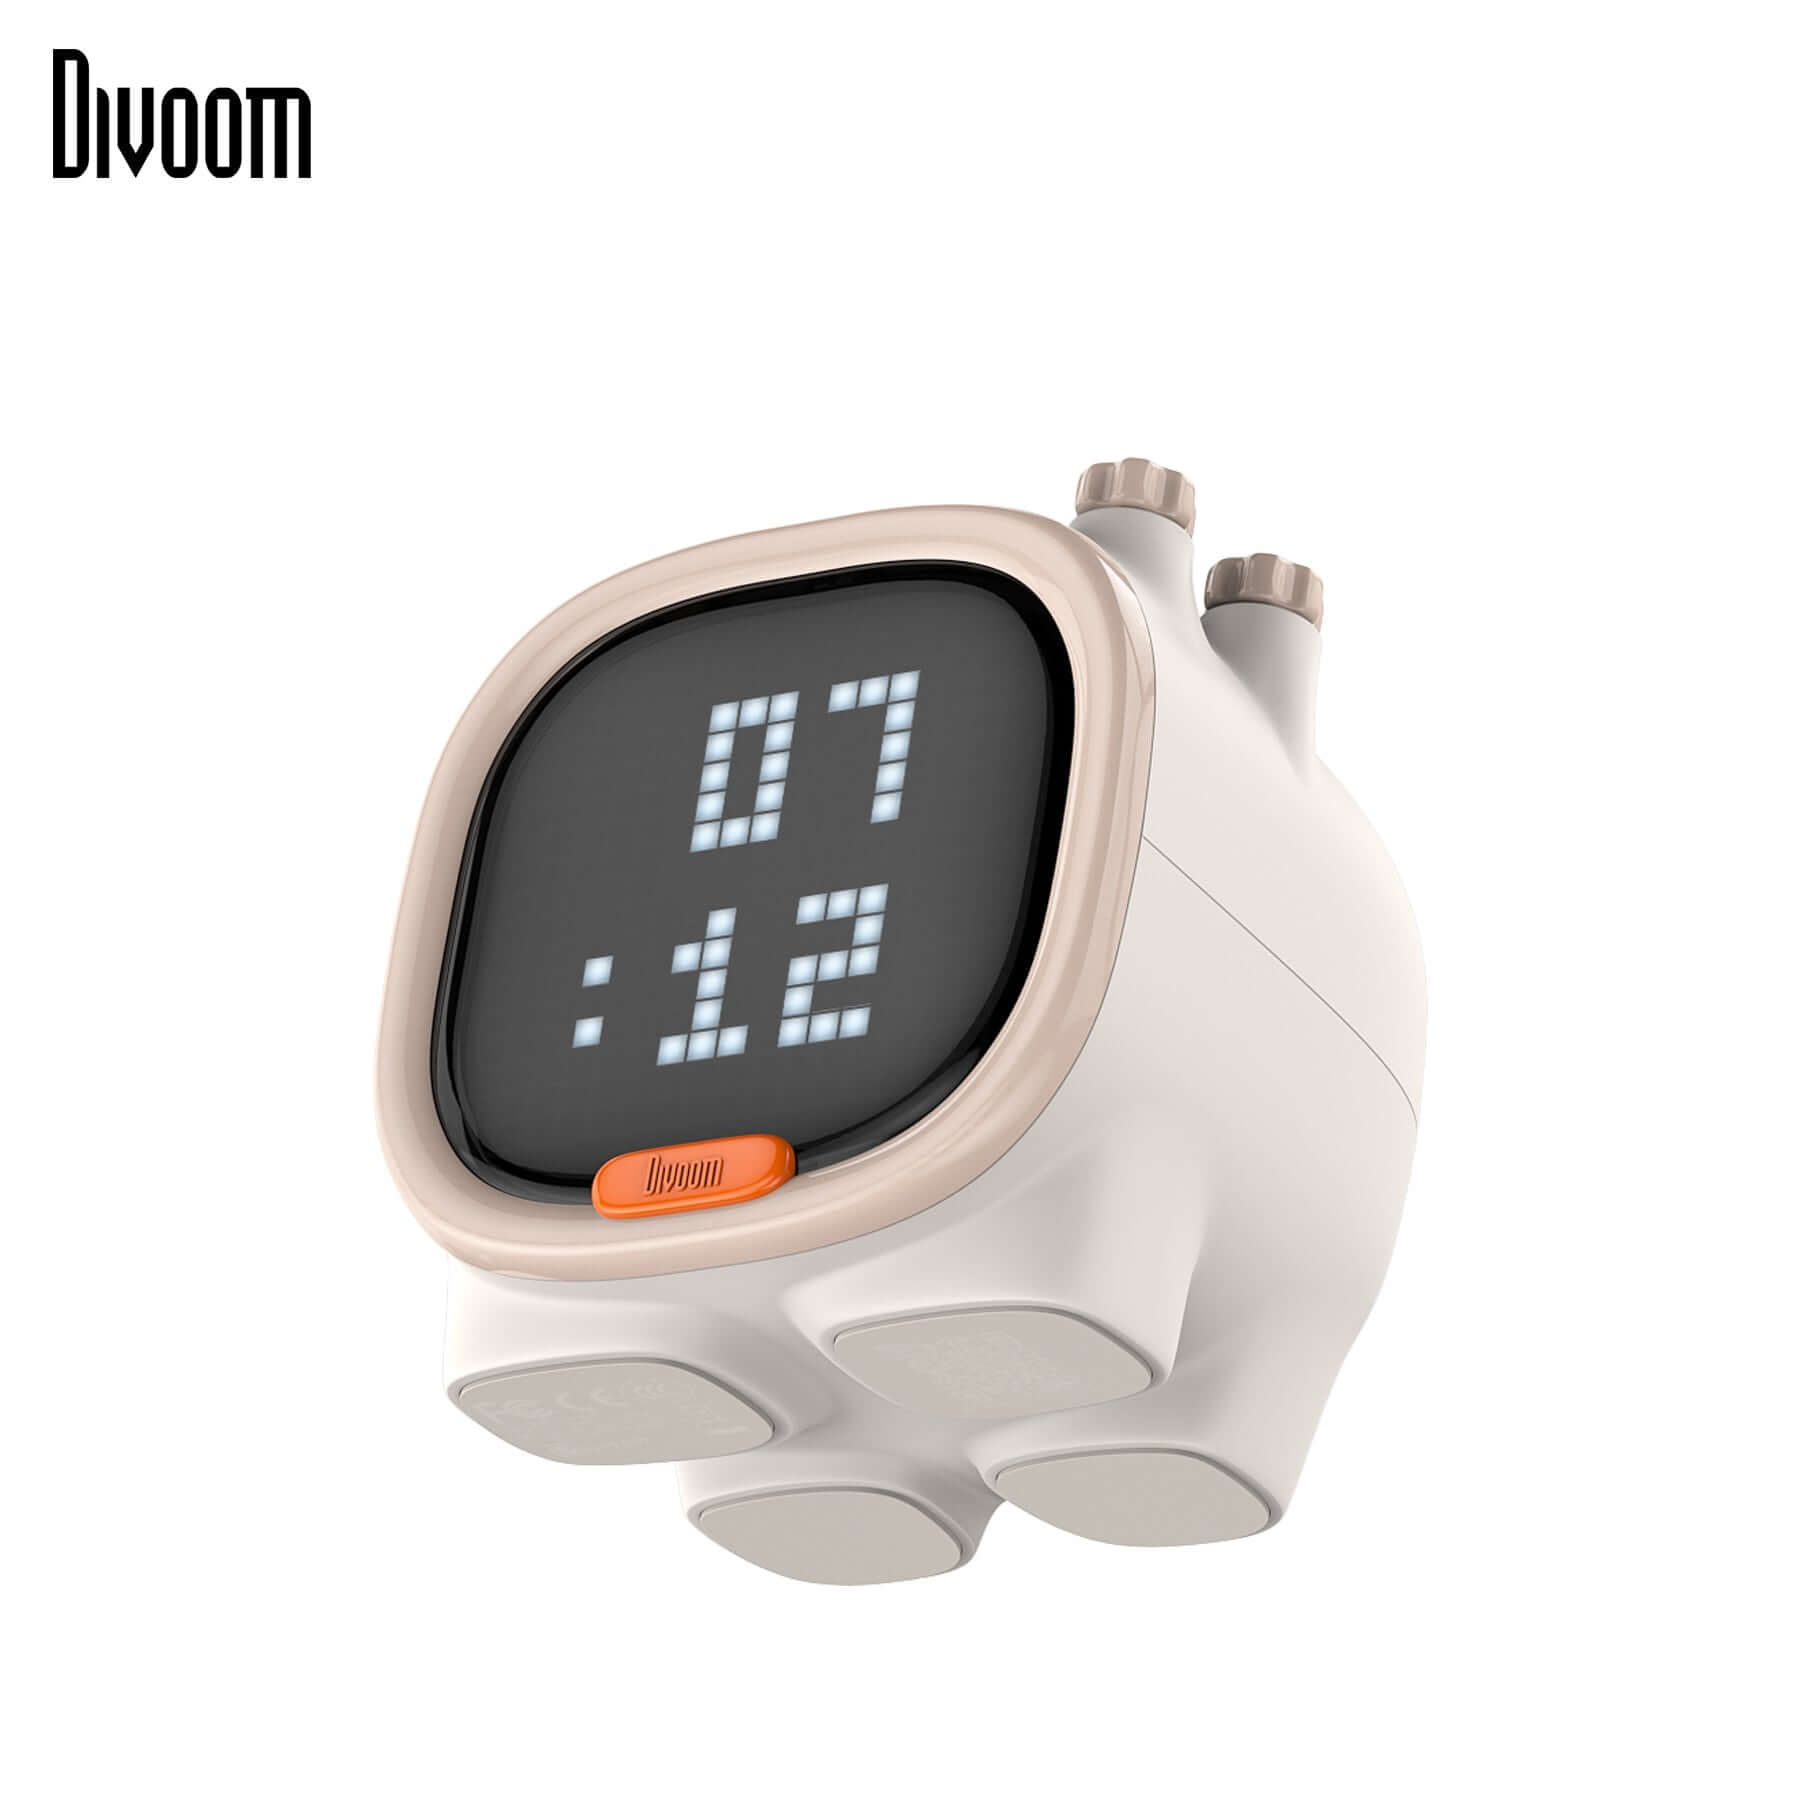 Divoom Pixel Art Bluetooth Speaker Alarm Clock for IOS Android Phone